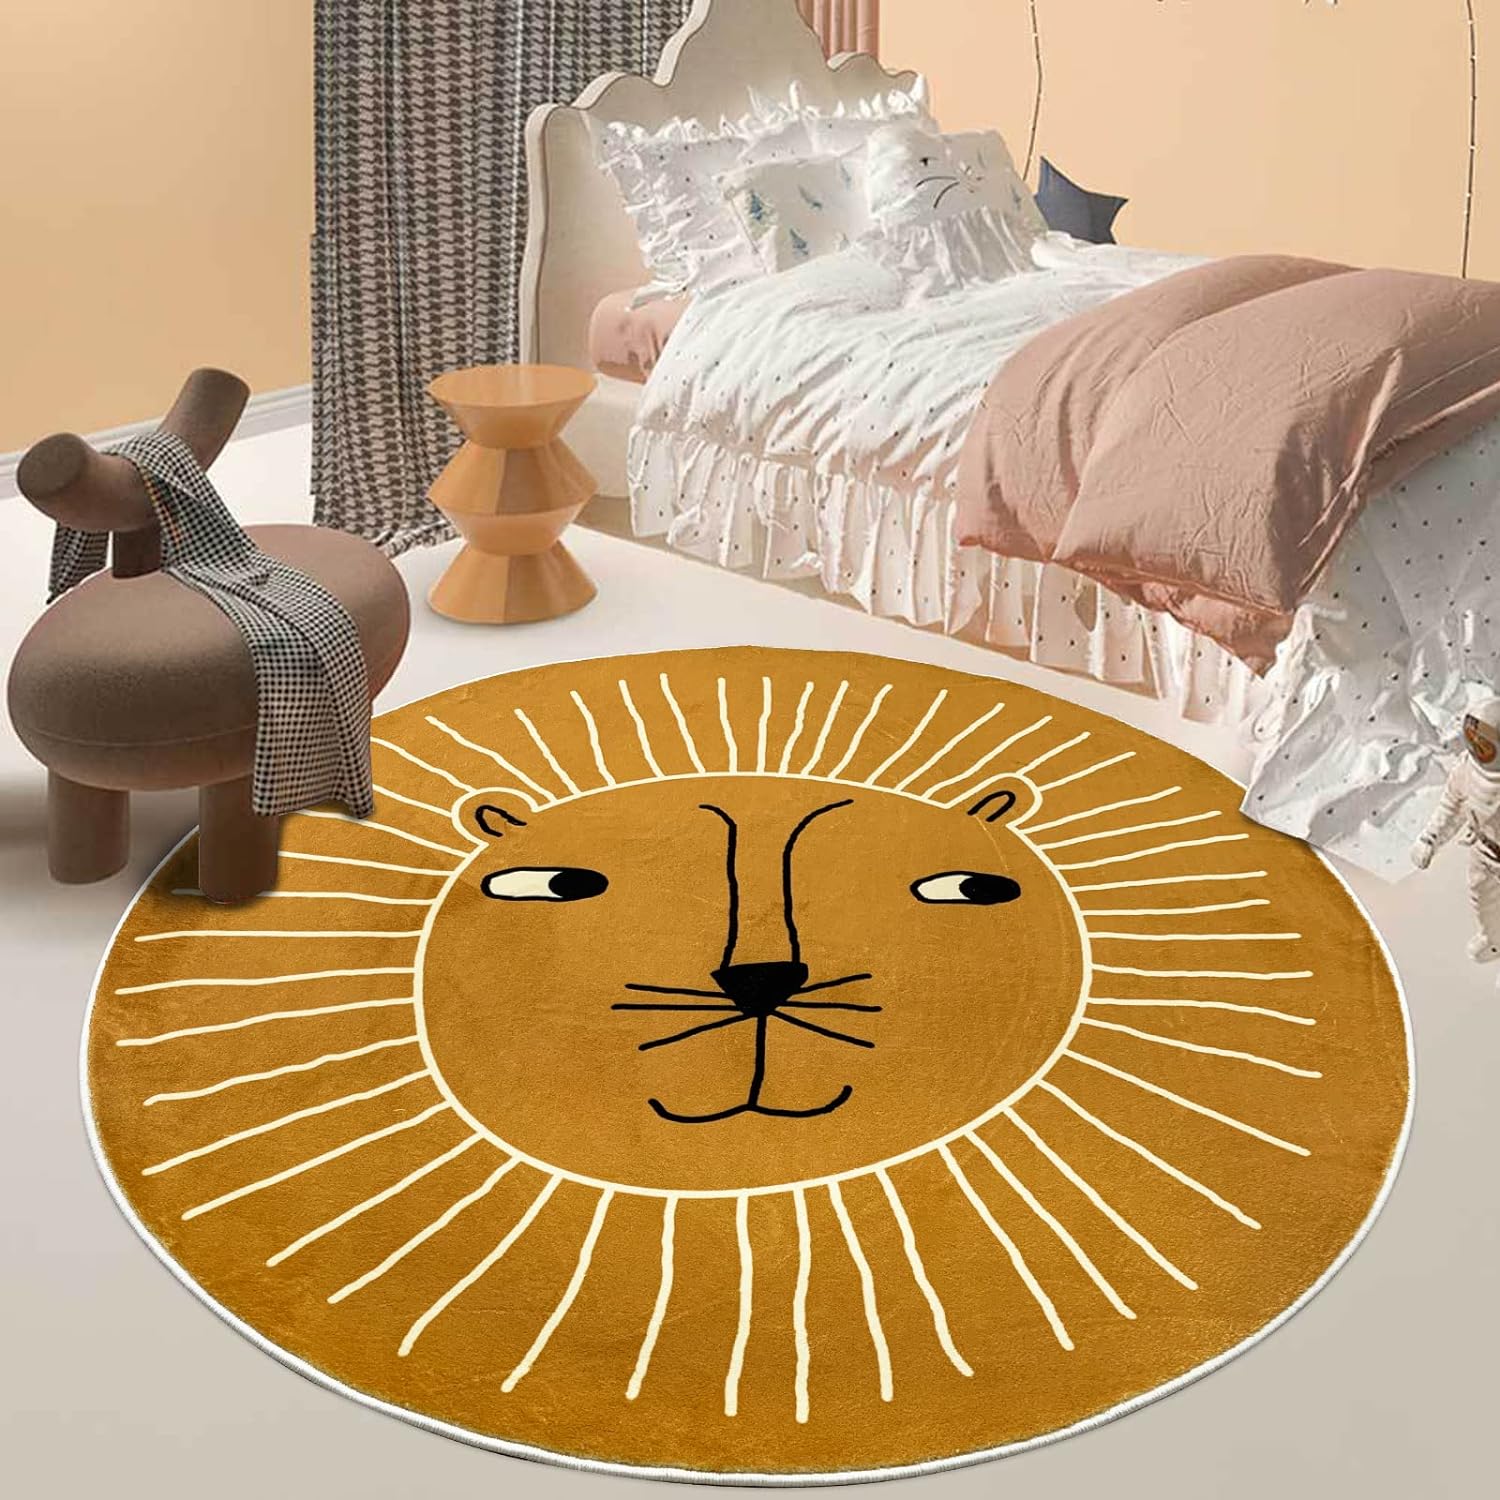 USTIDE Kids Play Mat 4Ft, Round Lion Play Rug Non Slip Kids Circle Rug Soft Nursery Rug Floor Carpet for Bedroom Playroom Decor